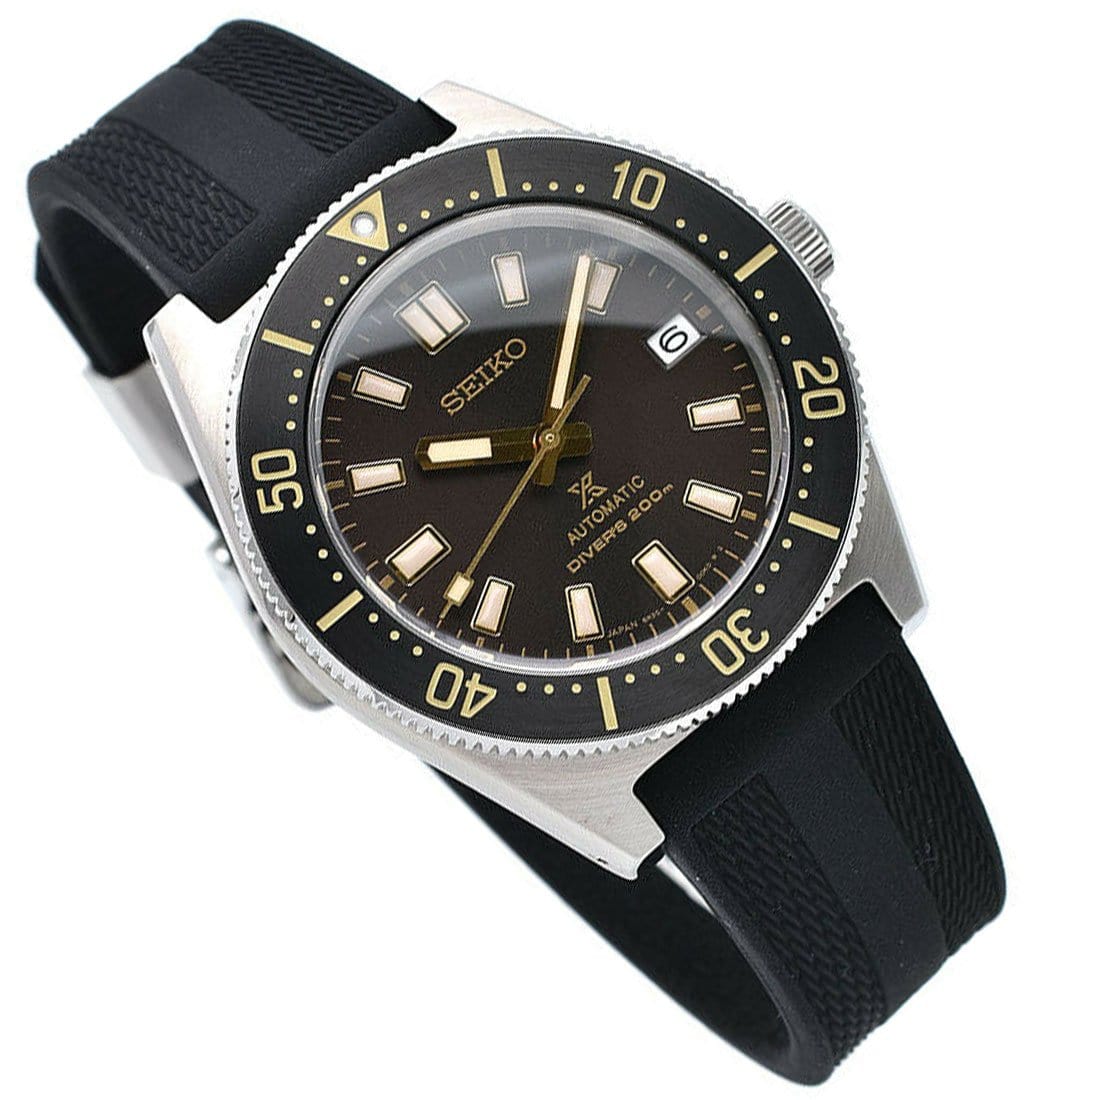 SBDC105 Seiko Prospex Automatic Divers 200M JDM Watch